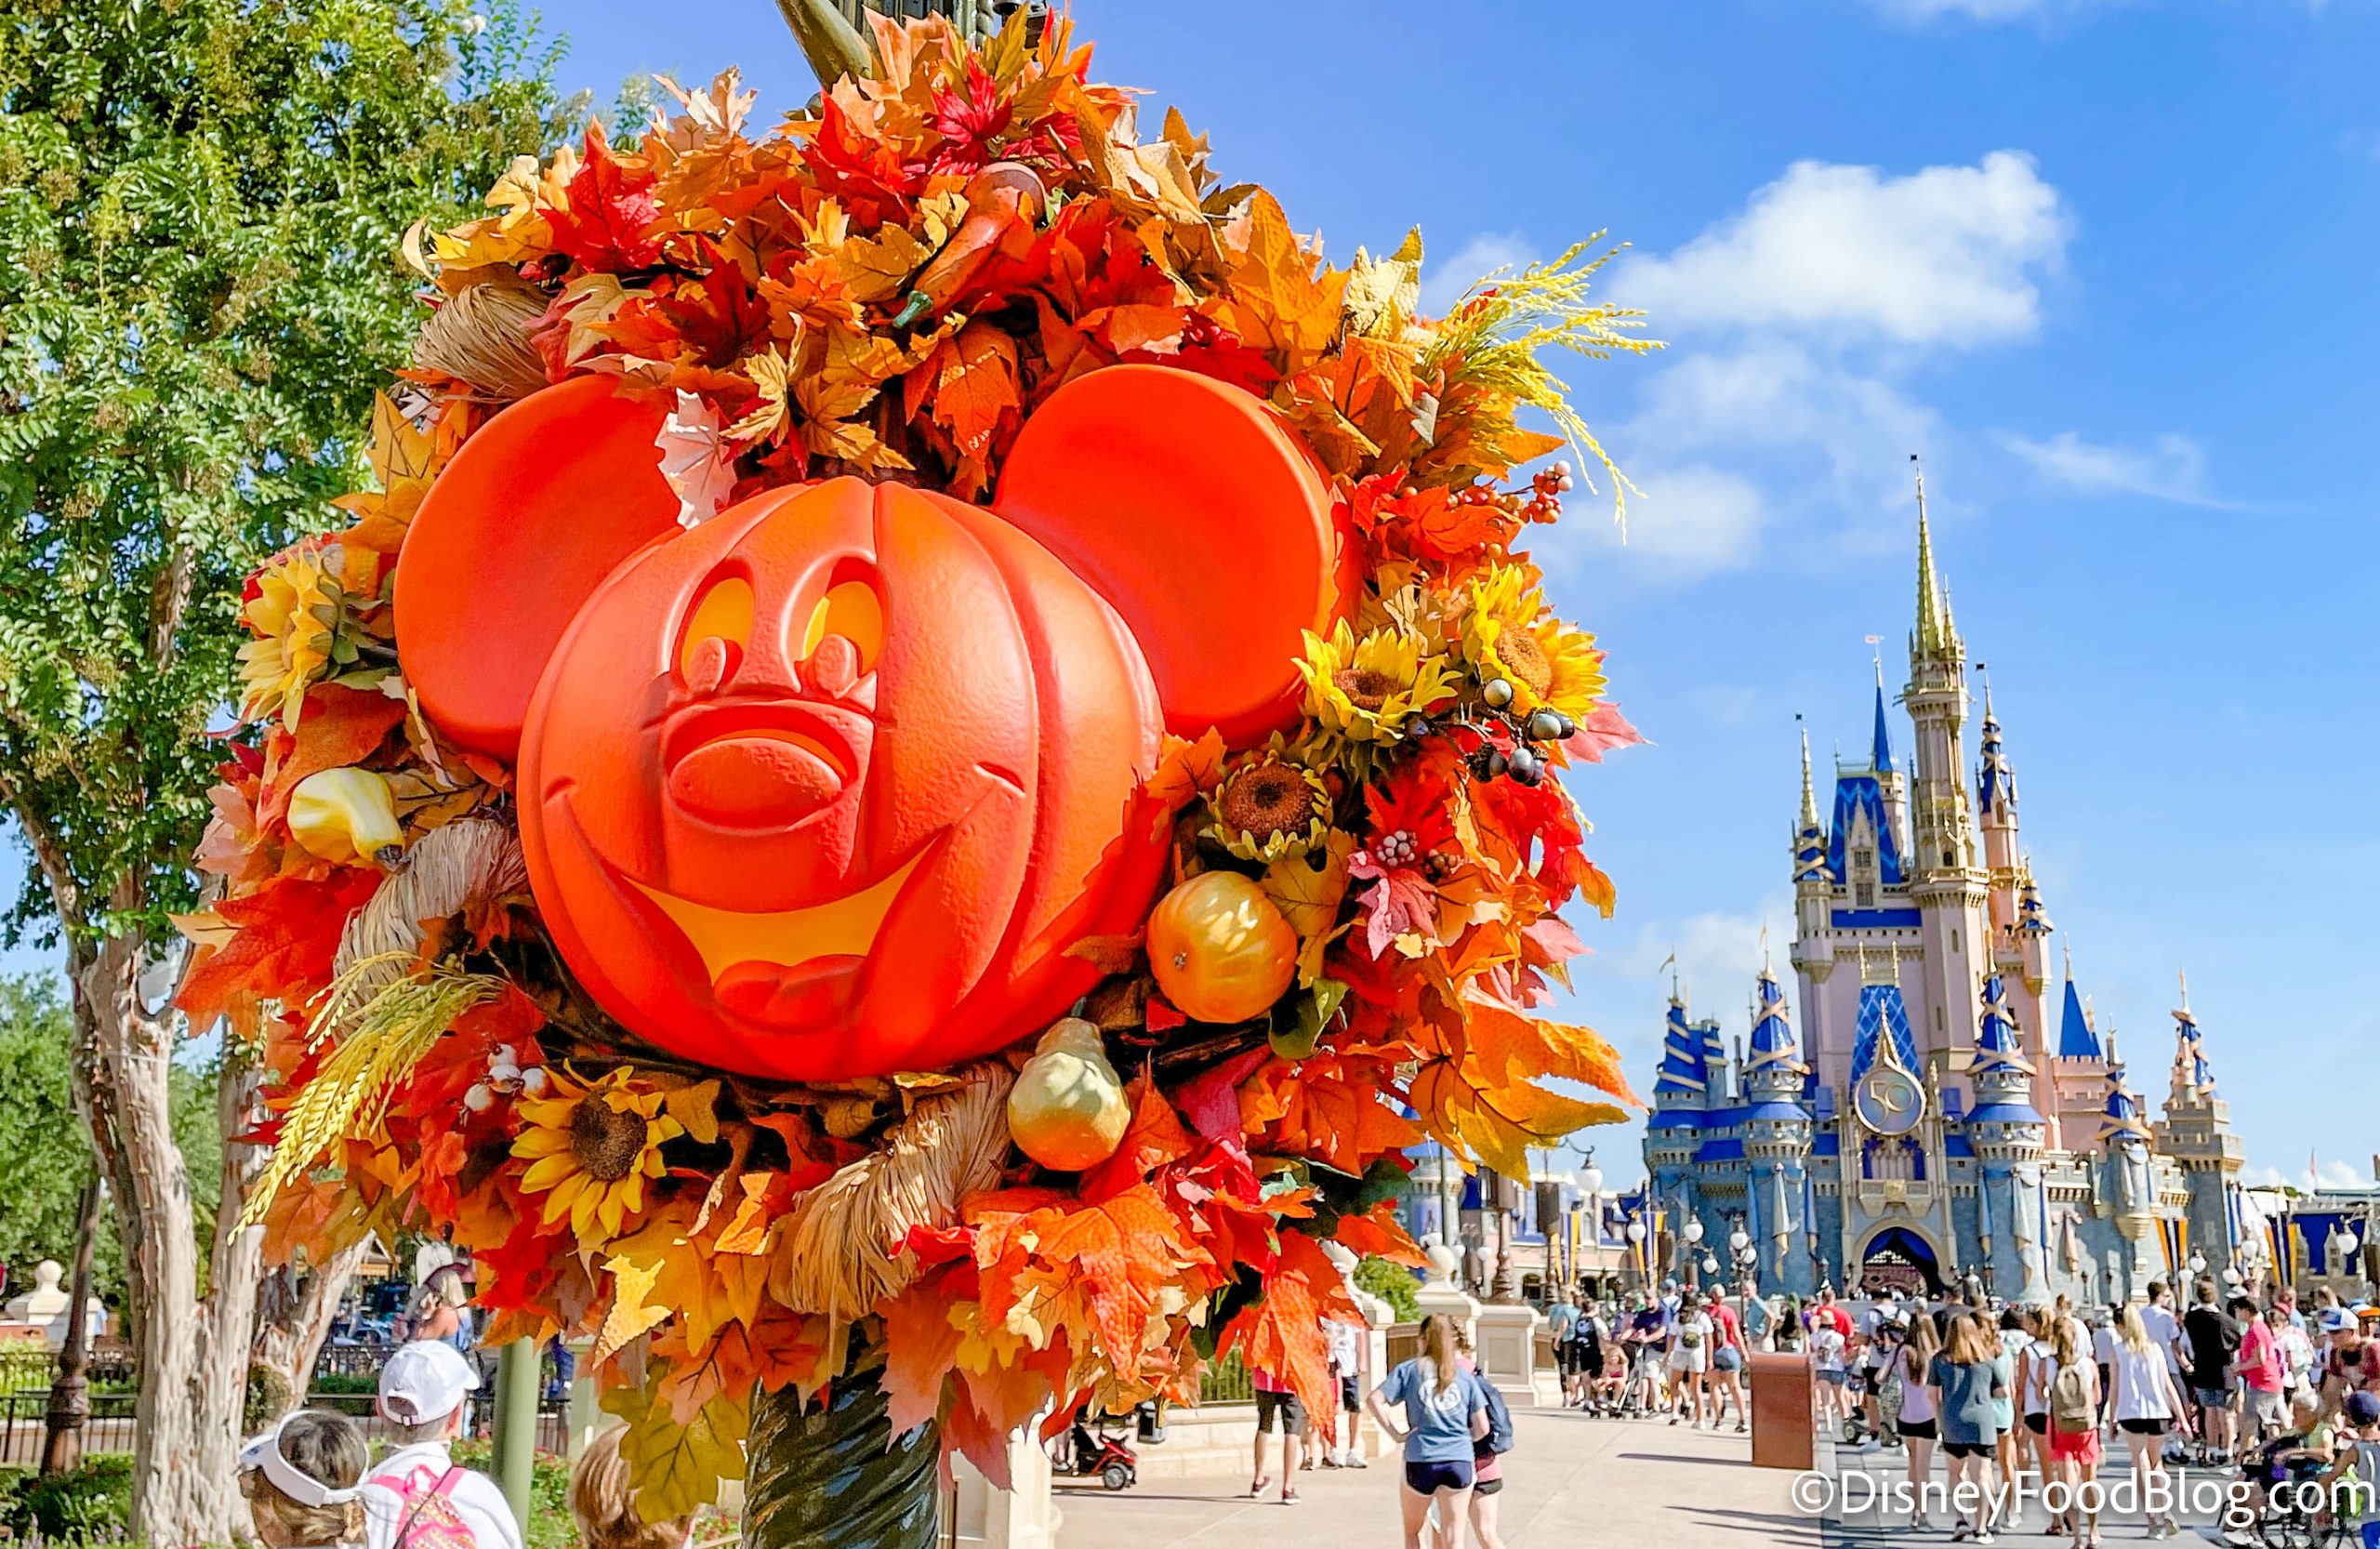 https://www.disneyfoodblog.com/wp-content/uploads/2021/08/wdw-2021-magic-kingdom-halloween-fall-decorations-mickey-pumpkins-wreaths-general-stock-atmosphere-7-scaled.jpg